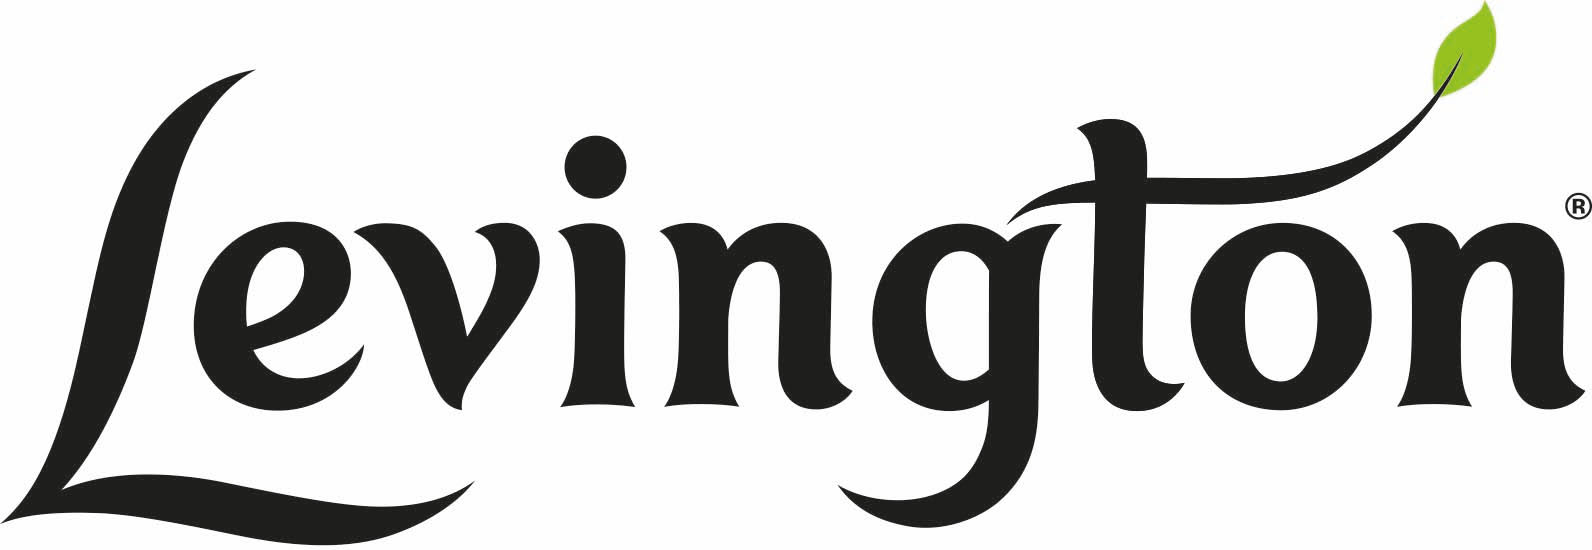 levington logo